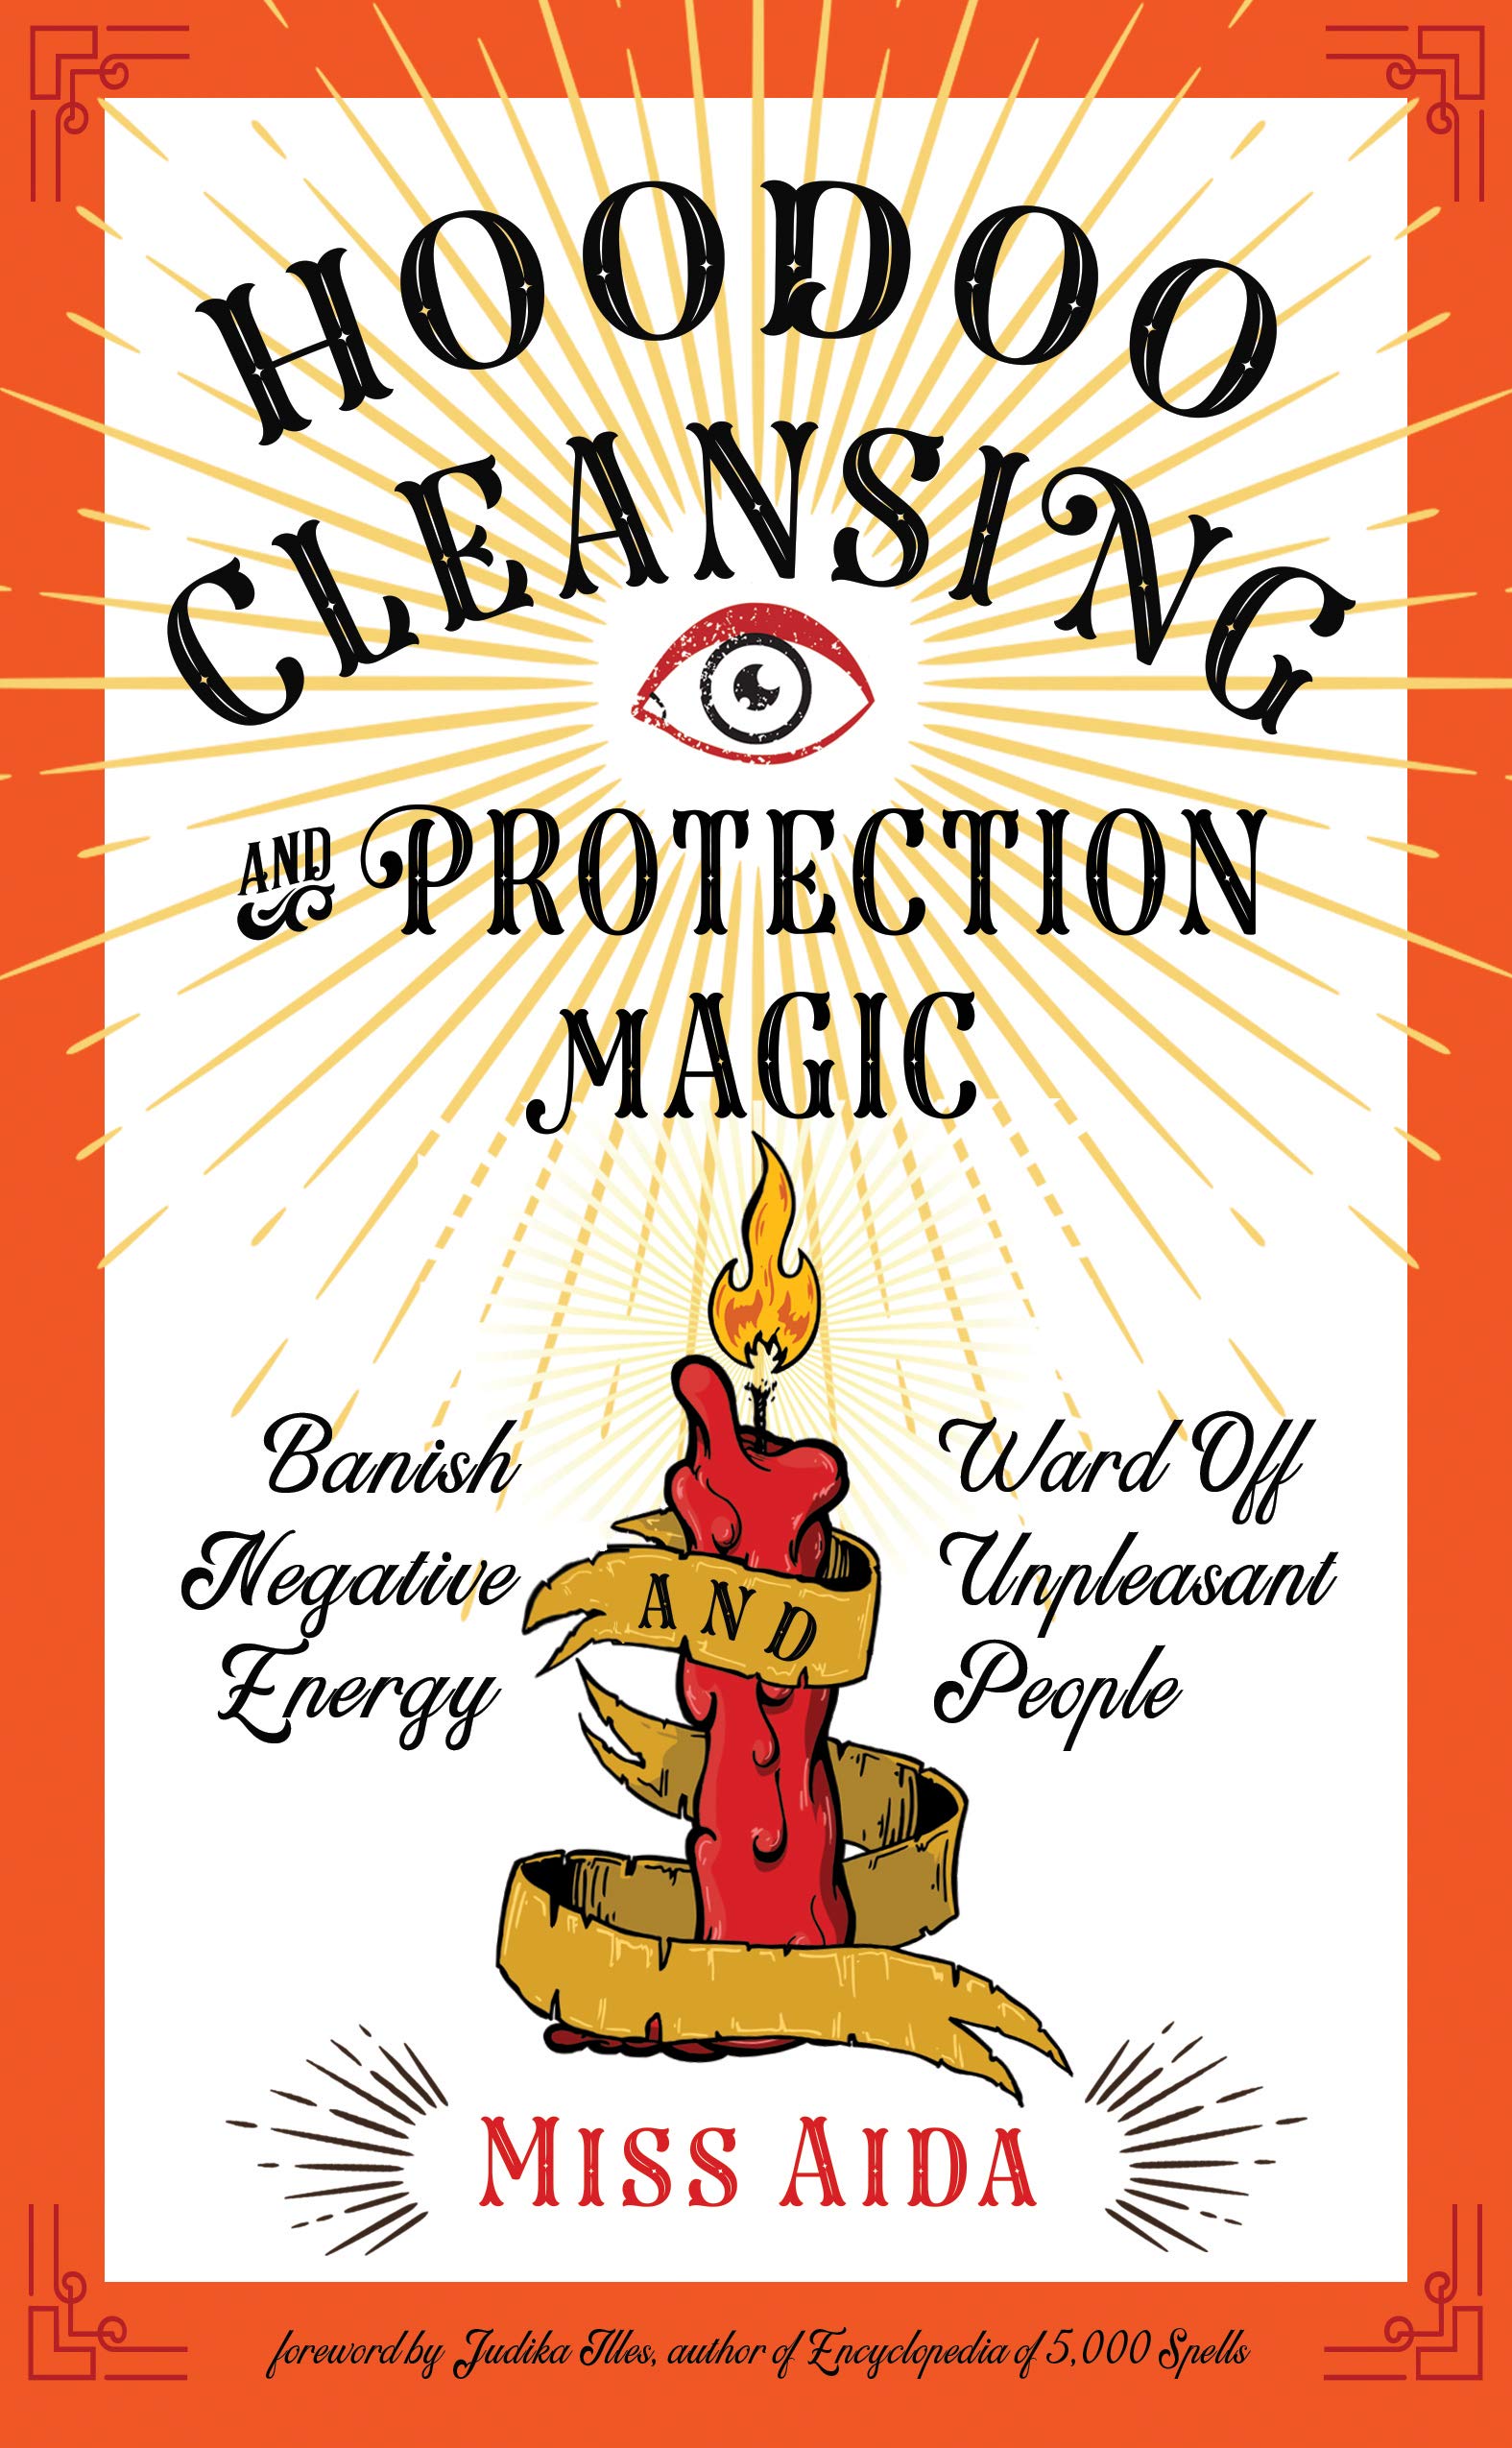 Hoodoo Cleansing and Protection Magic - SureShot Books Publishing LLC